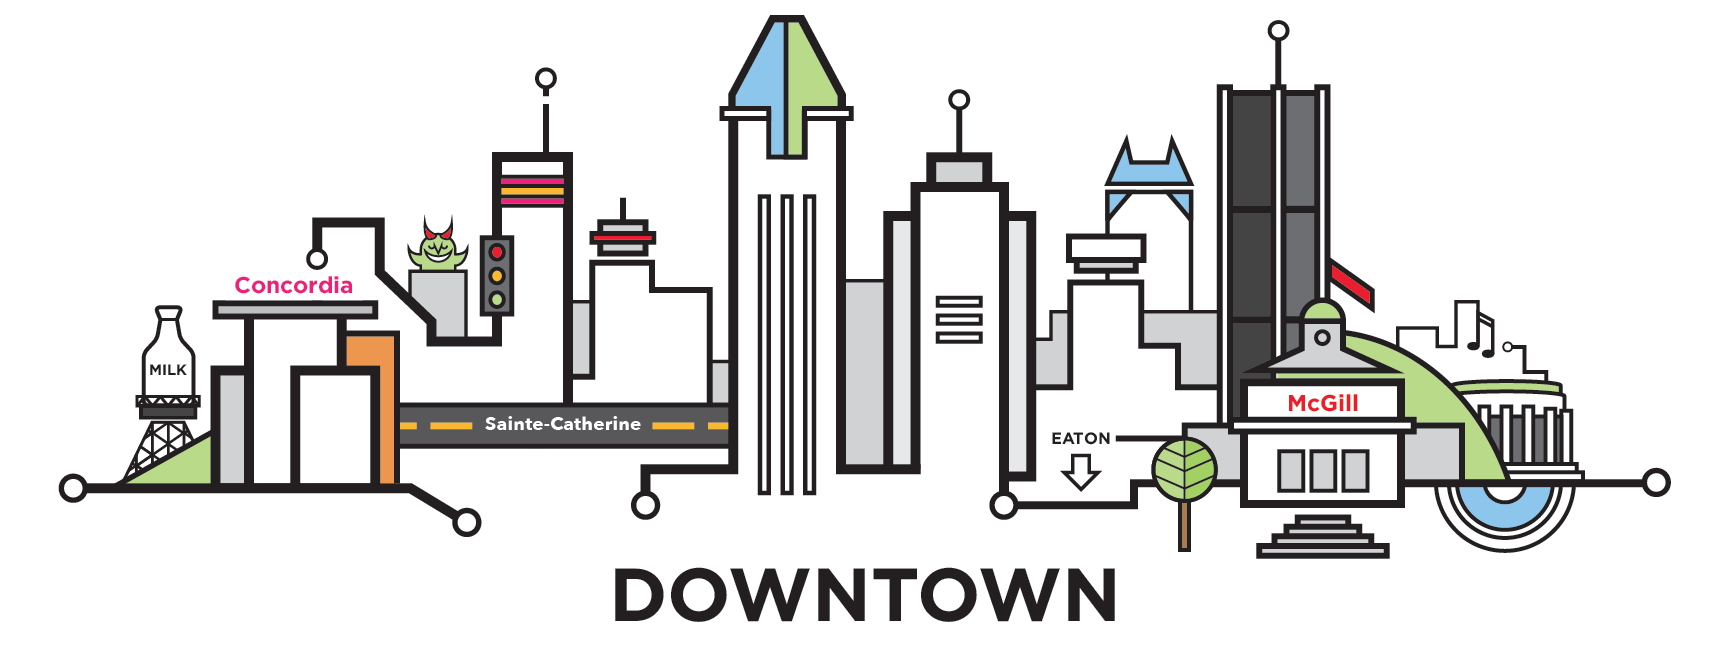 downtown-mtl-cityline-illustration-by-loogart